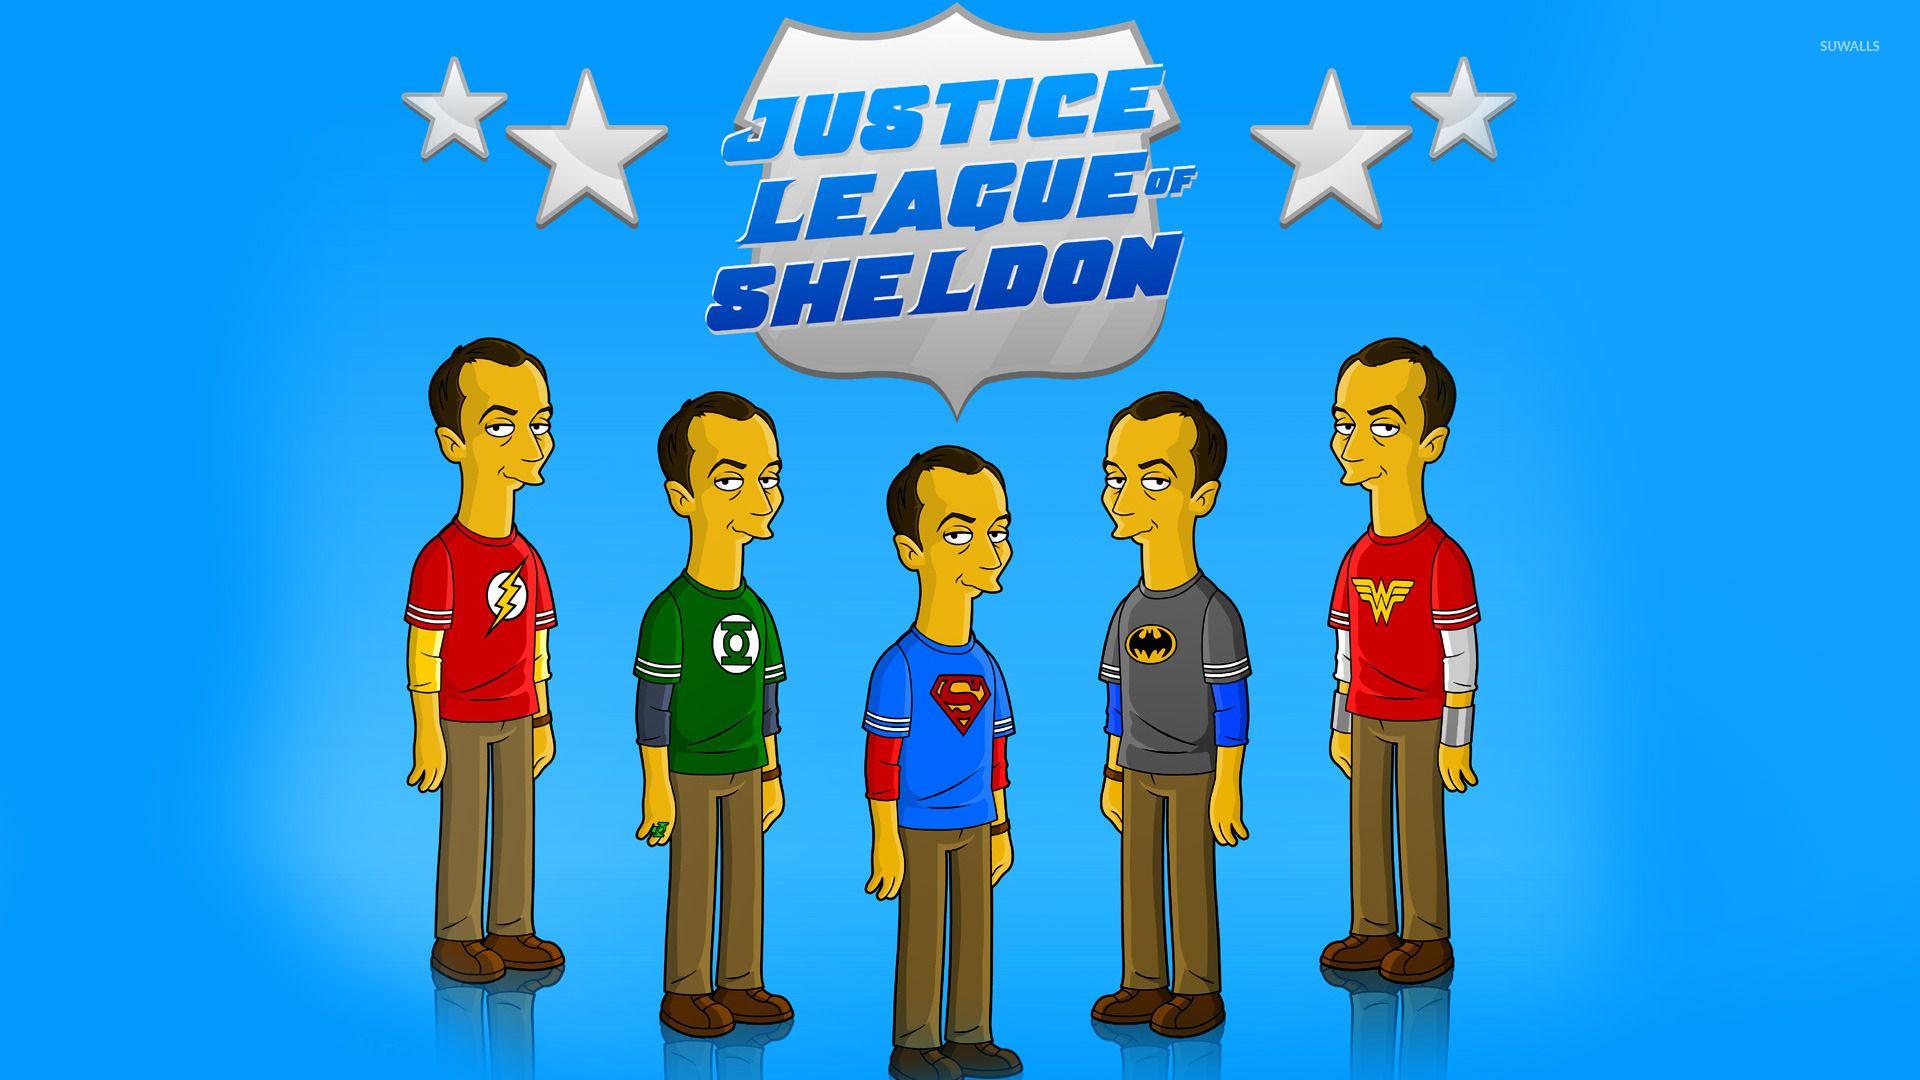 Justice league of Sheldon wallpaper wallpaper